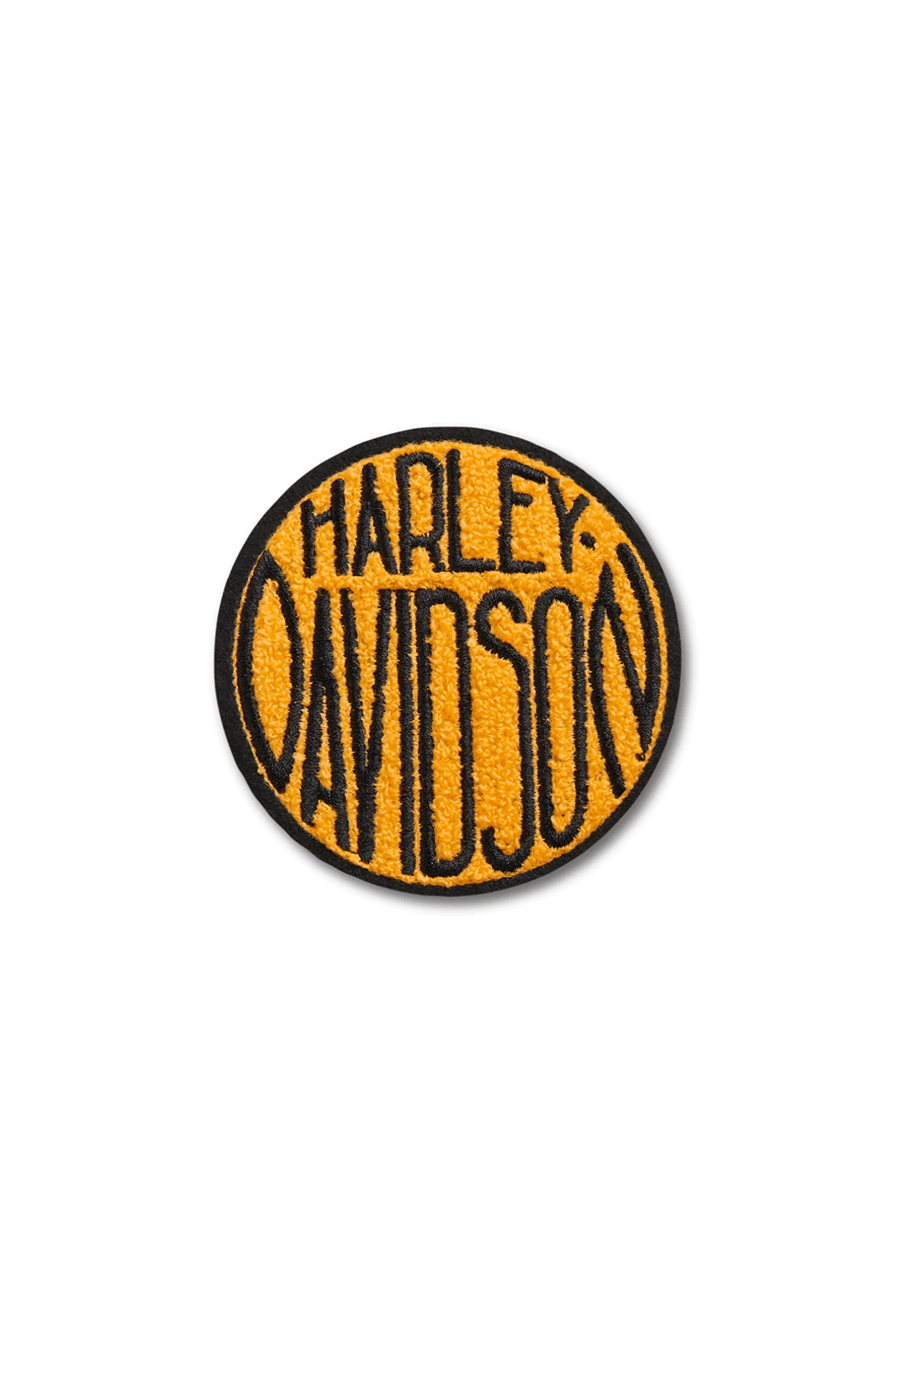 Harley-Davidson® Patch Multi Color